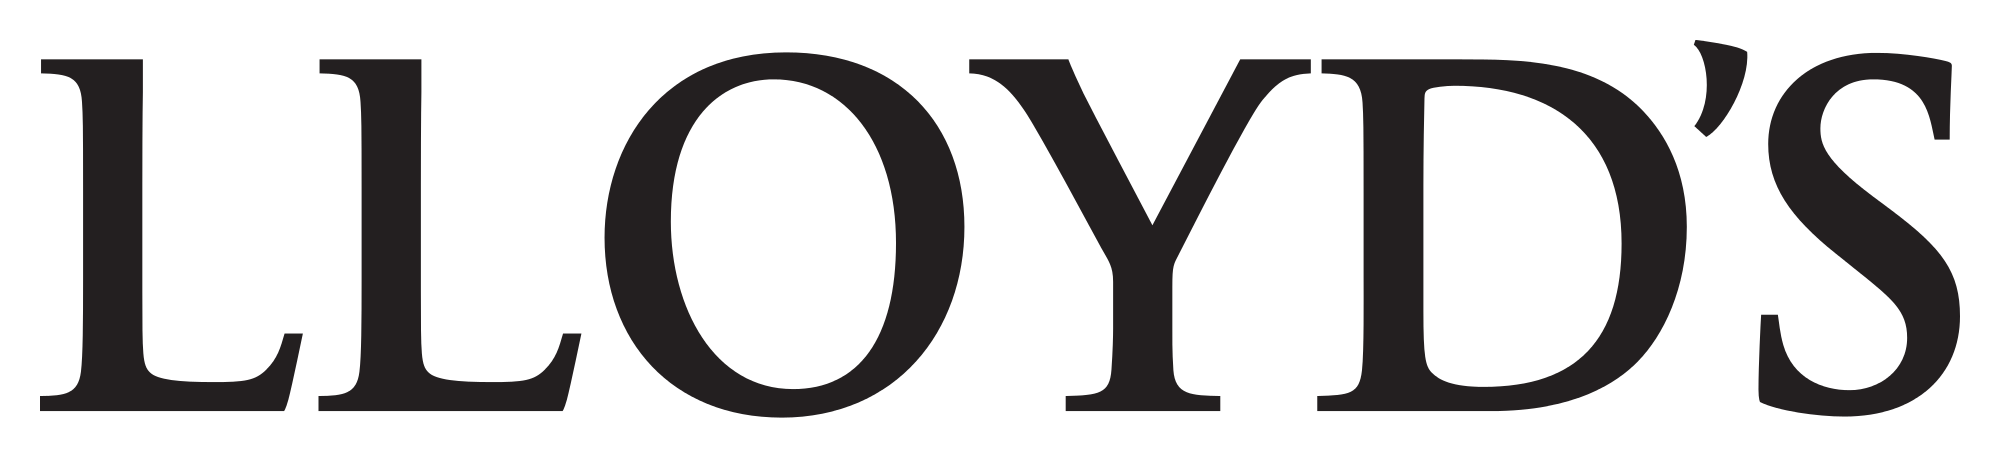 Logo Lloyds of London.svg